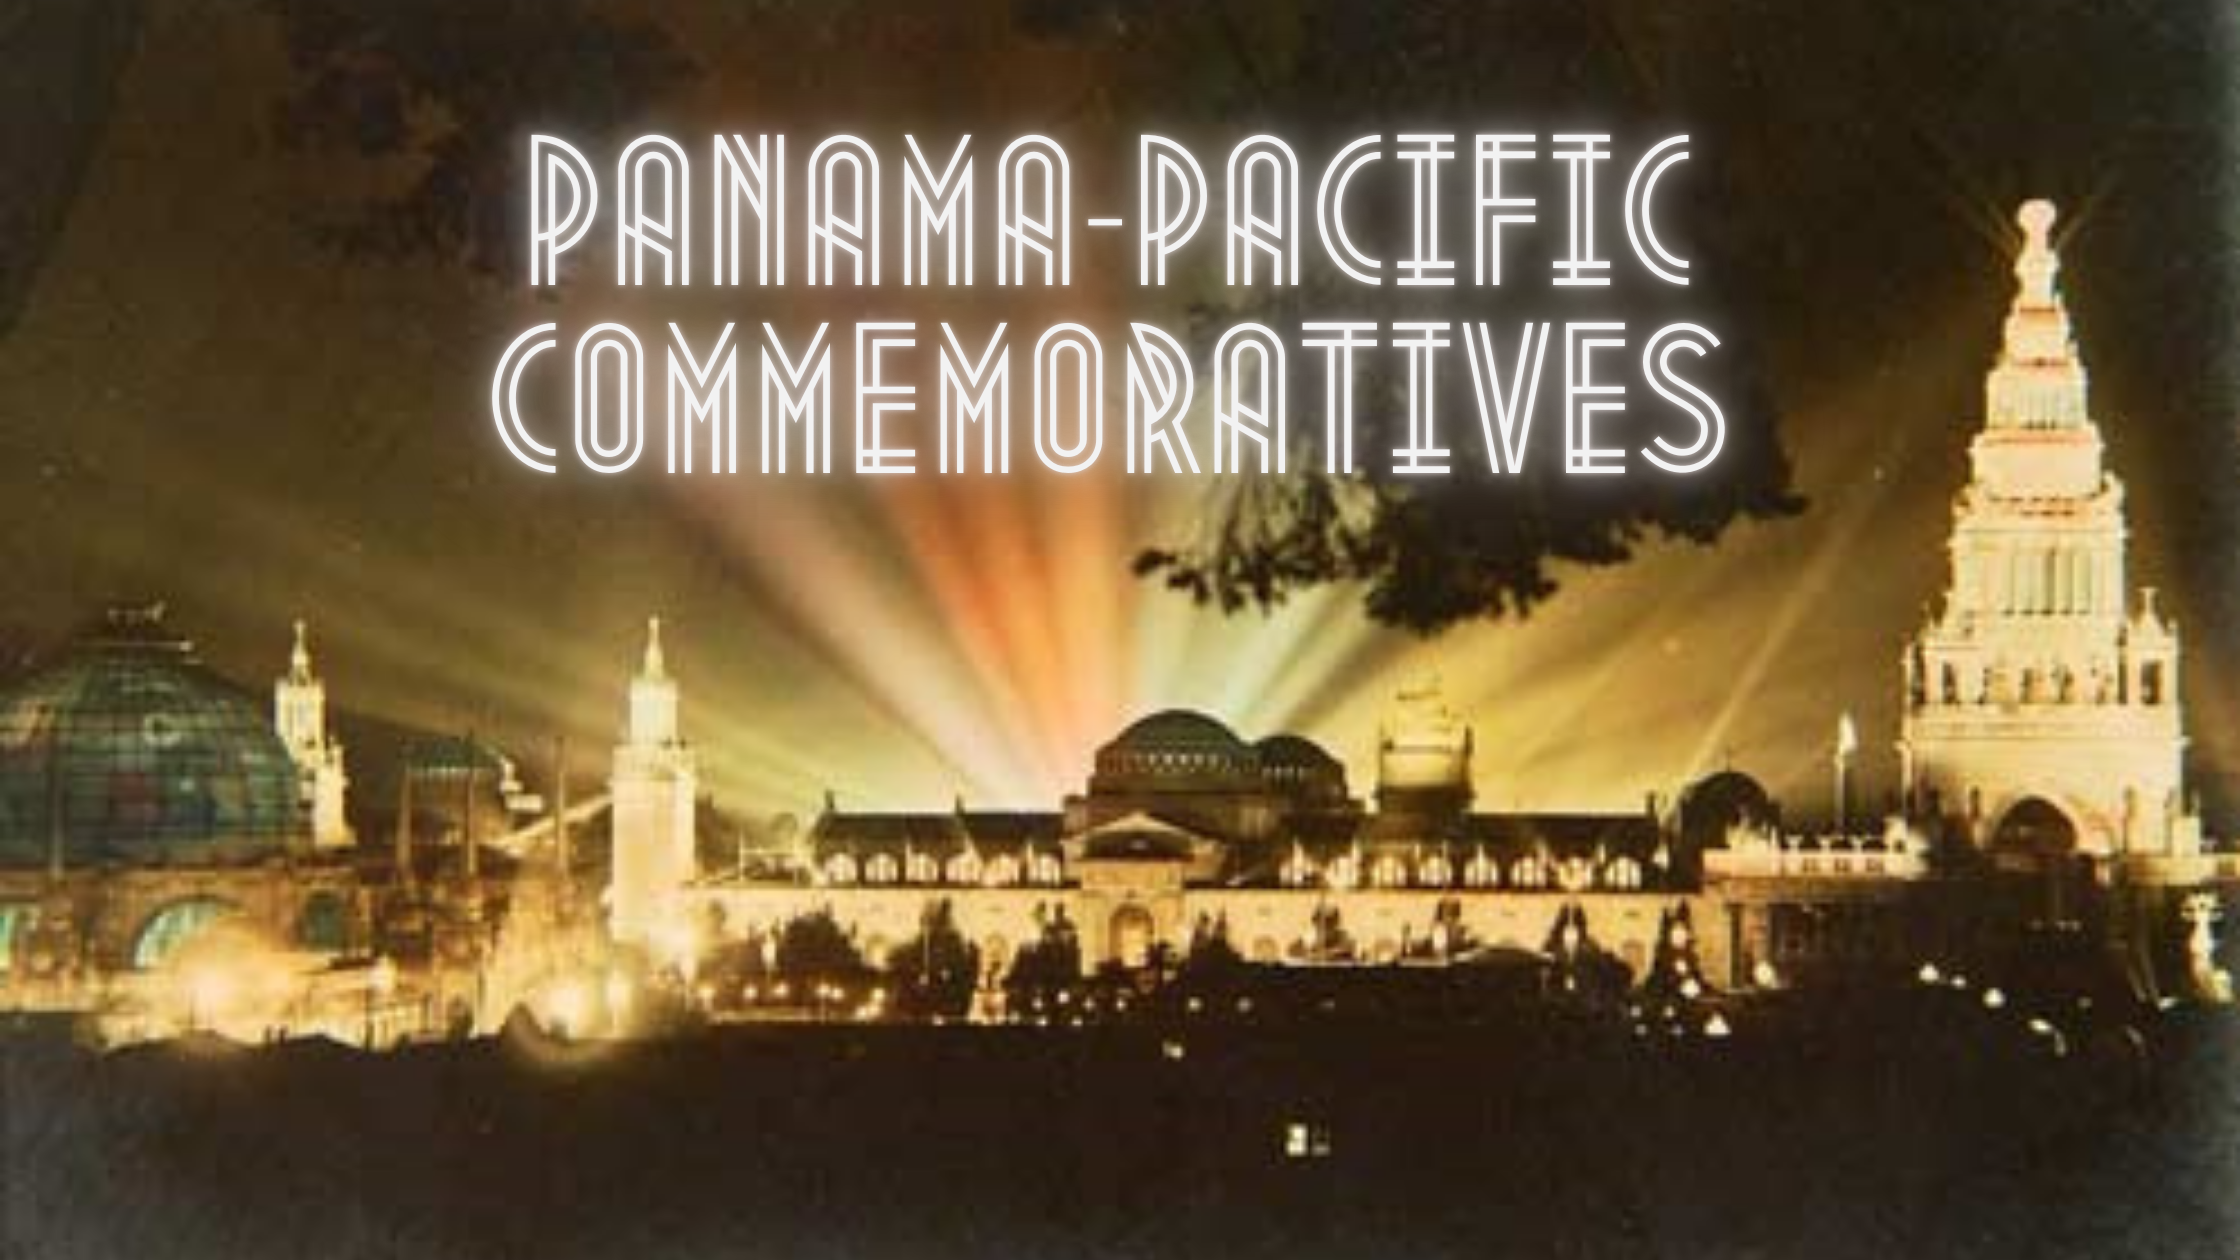 Panama-Pacific Commemoratives